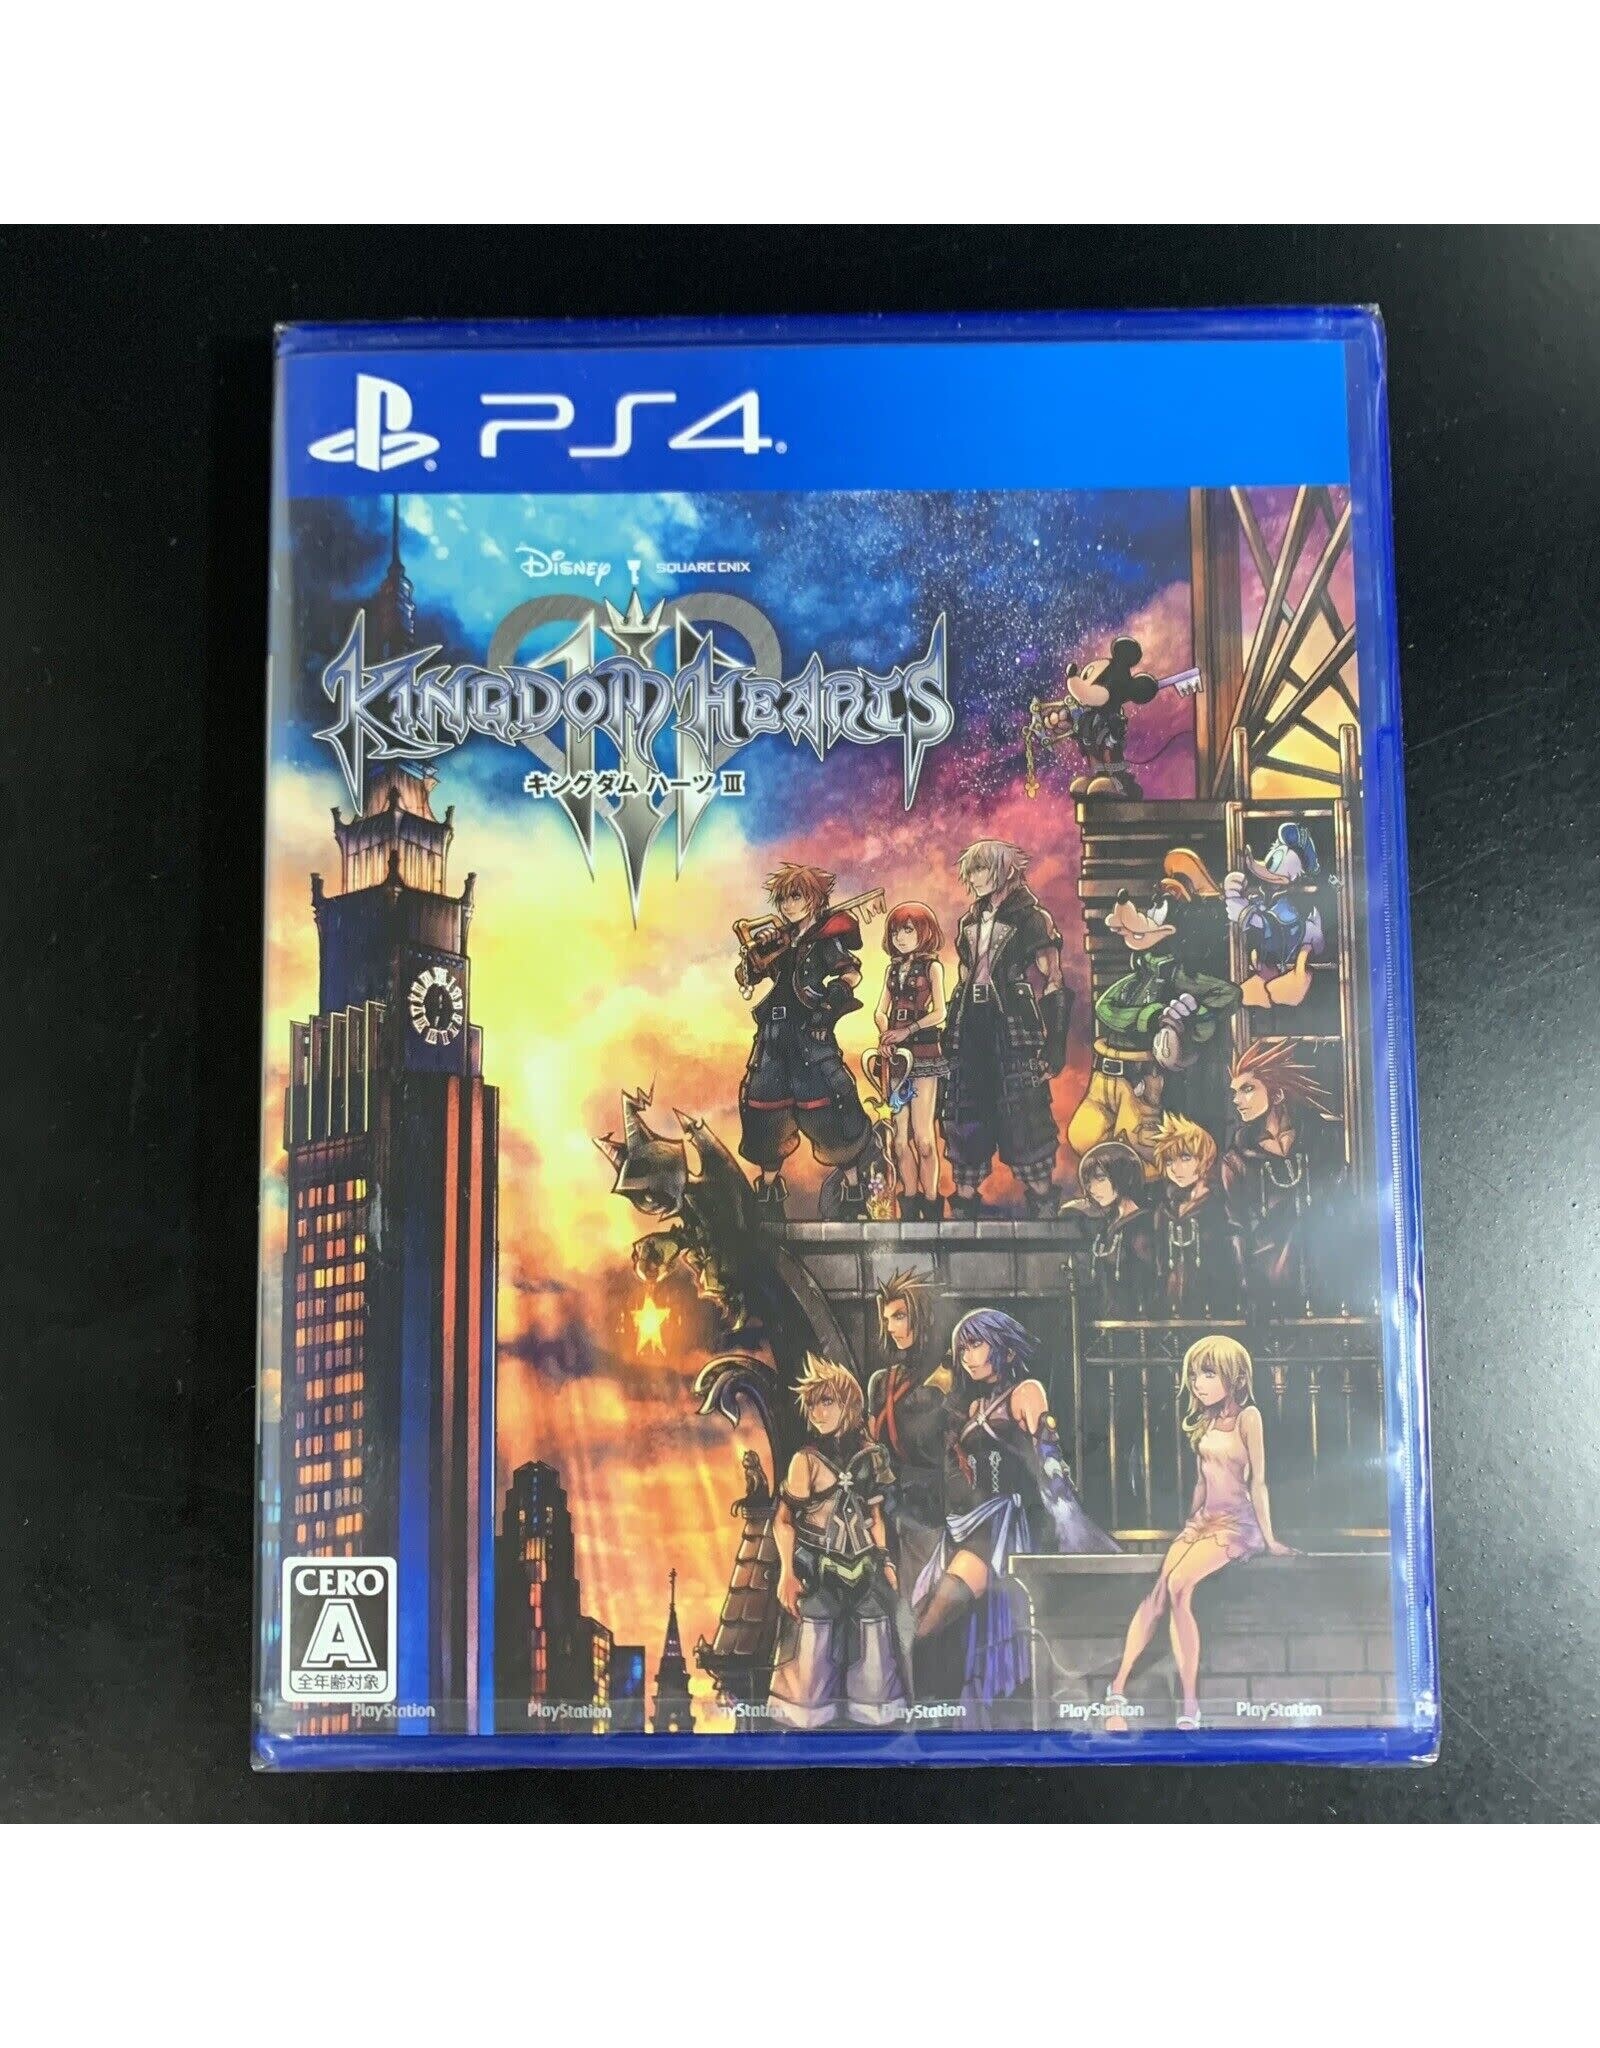 Playstation 4 Kingdom Hearts III (Used, JPN Import)